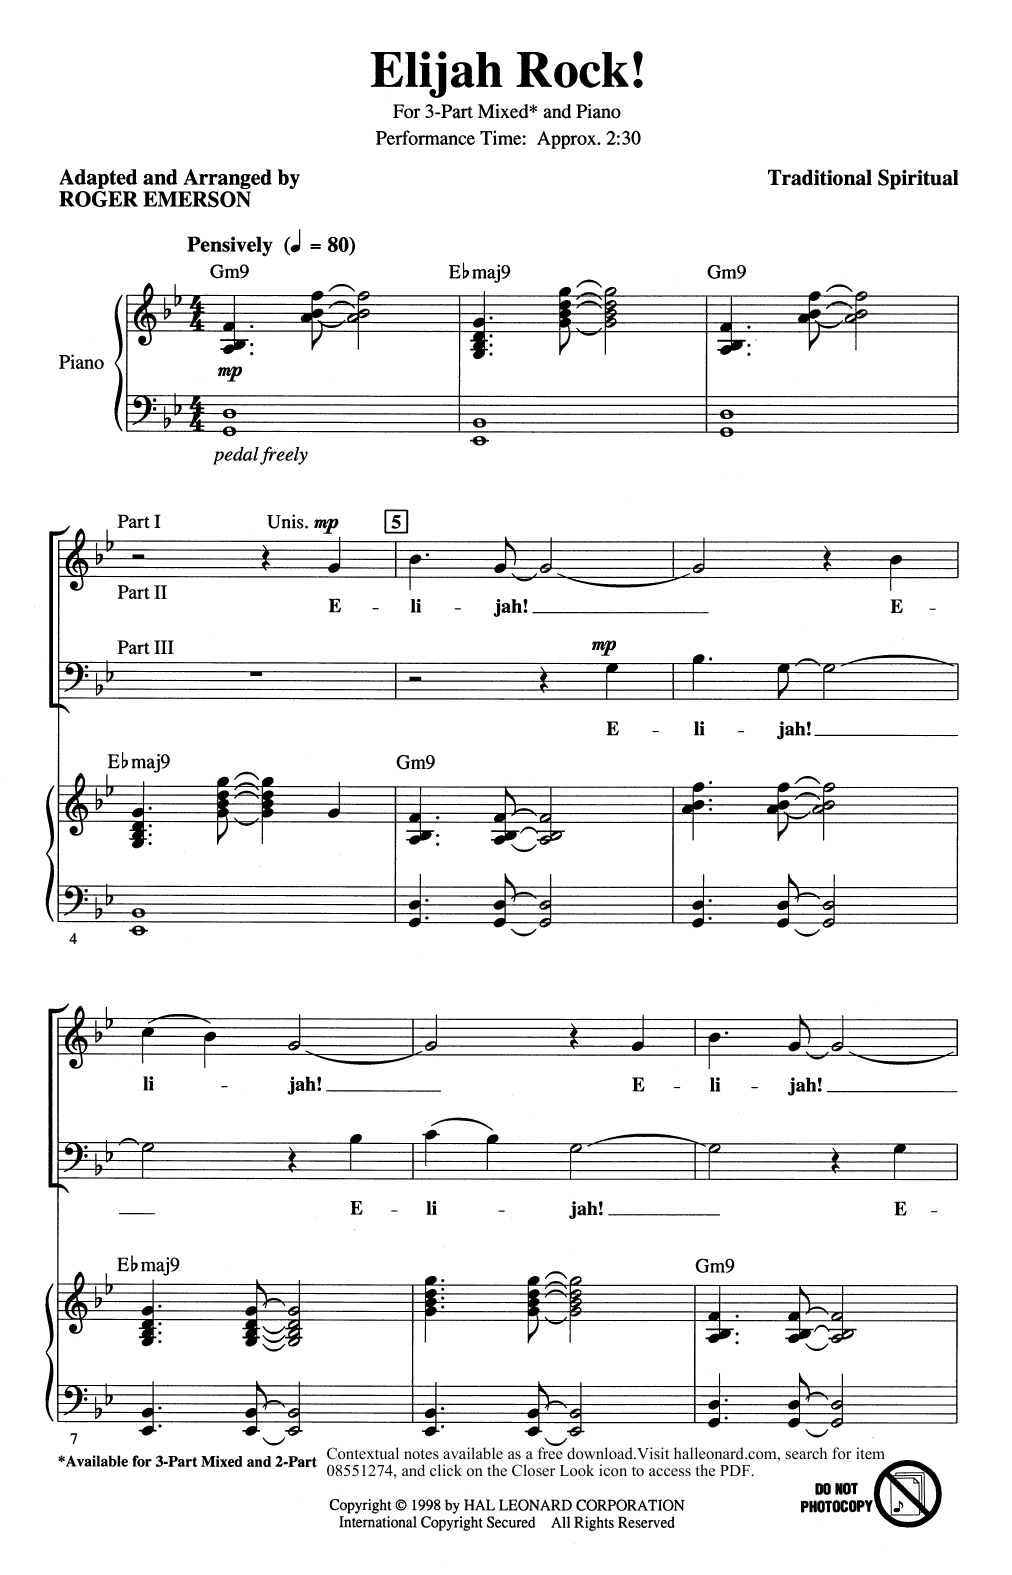 Traditional Spiritual Elijah Rock (arr. Roger Emerson) Sheet Music Notes & Chords for 2-Part Choir - Download or Print PDF